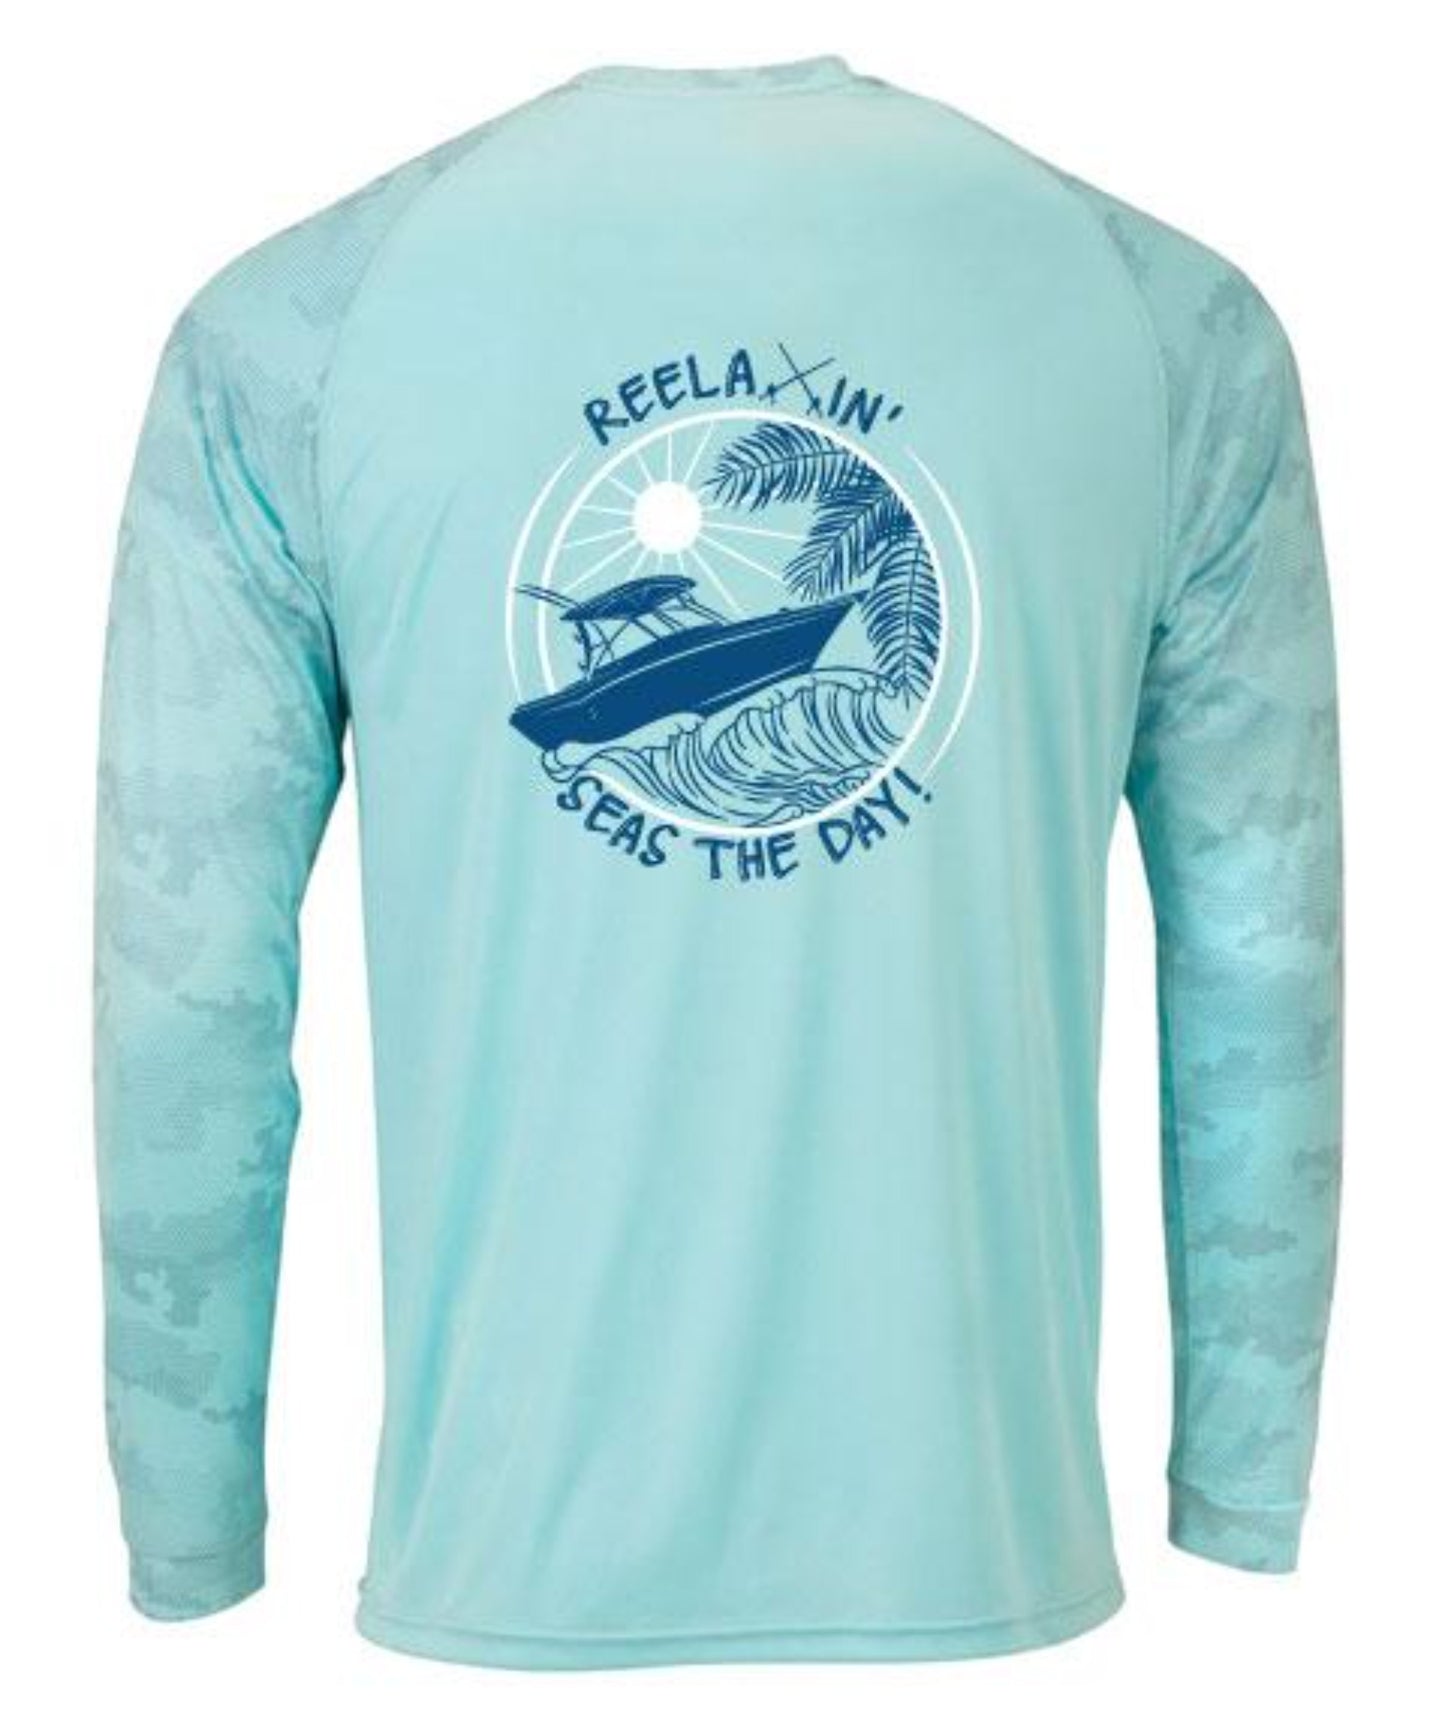 Aqua Blue Reelaxin' Digital Camo Performance Dry-Fit Fishing Long Sleeve Shirts, 50+ UPF Sun Protection  - Reel Fishy Apparel